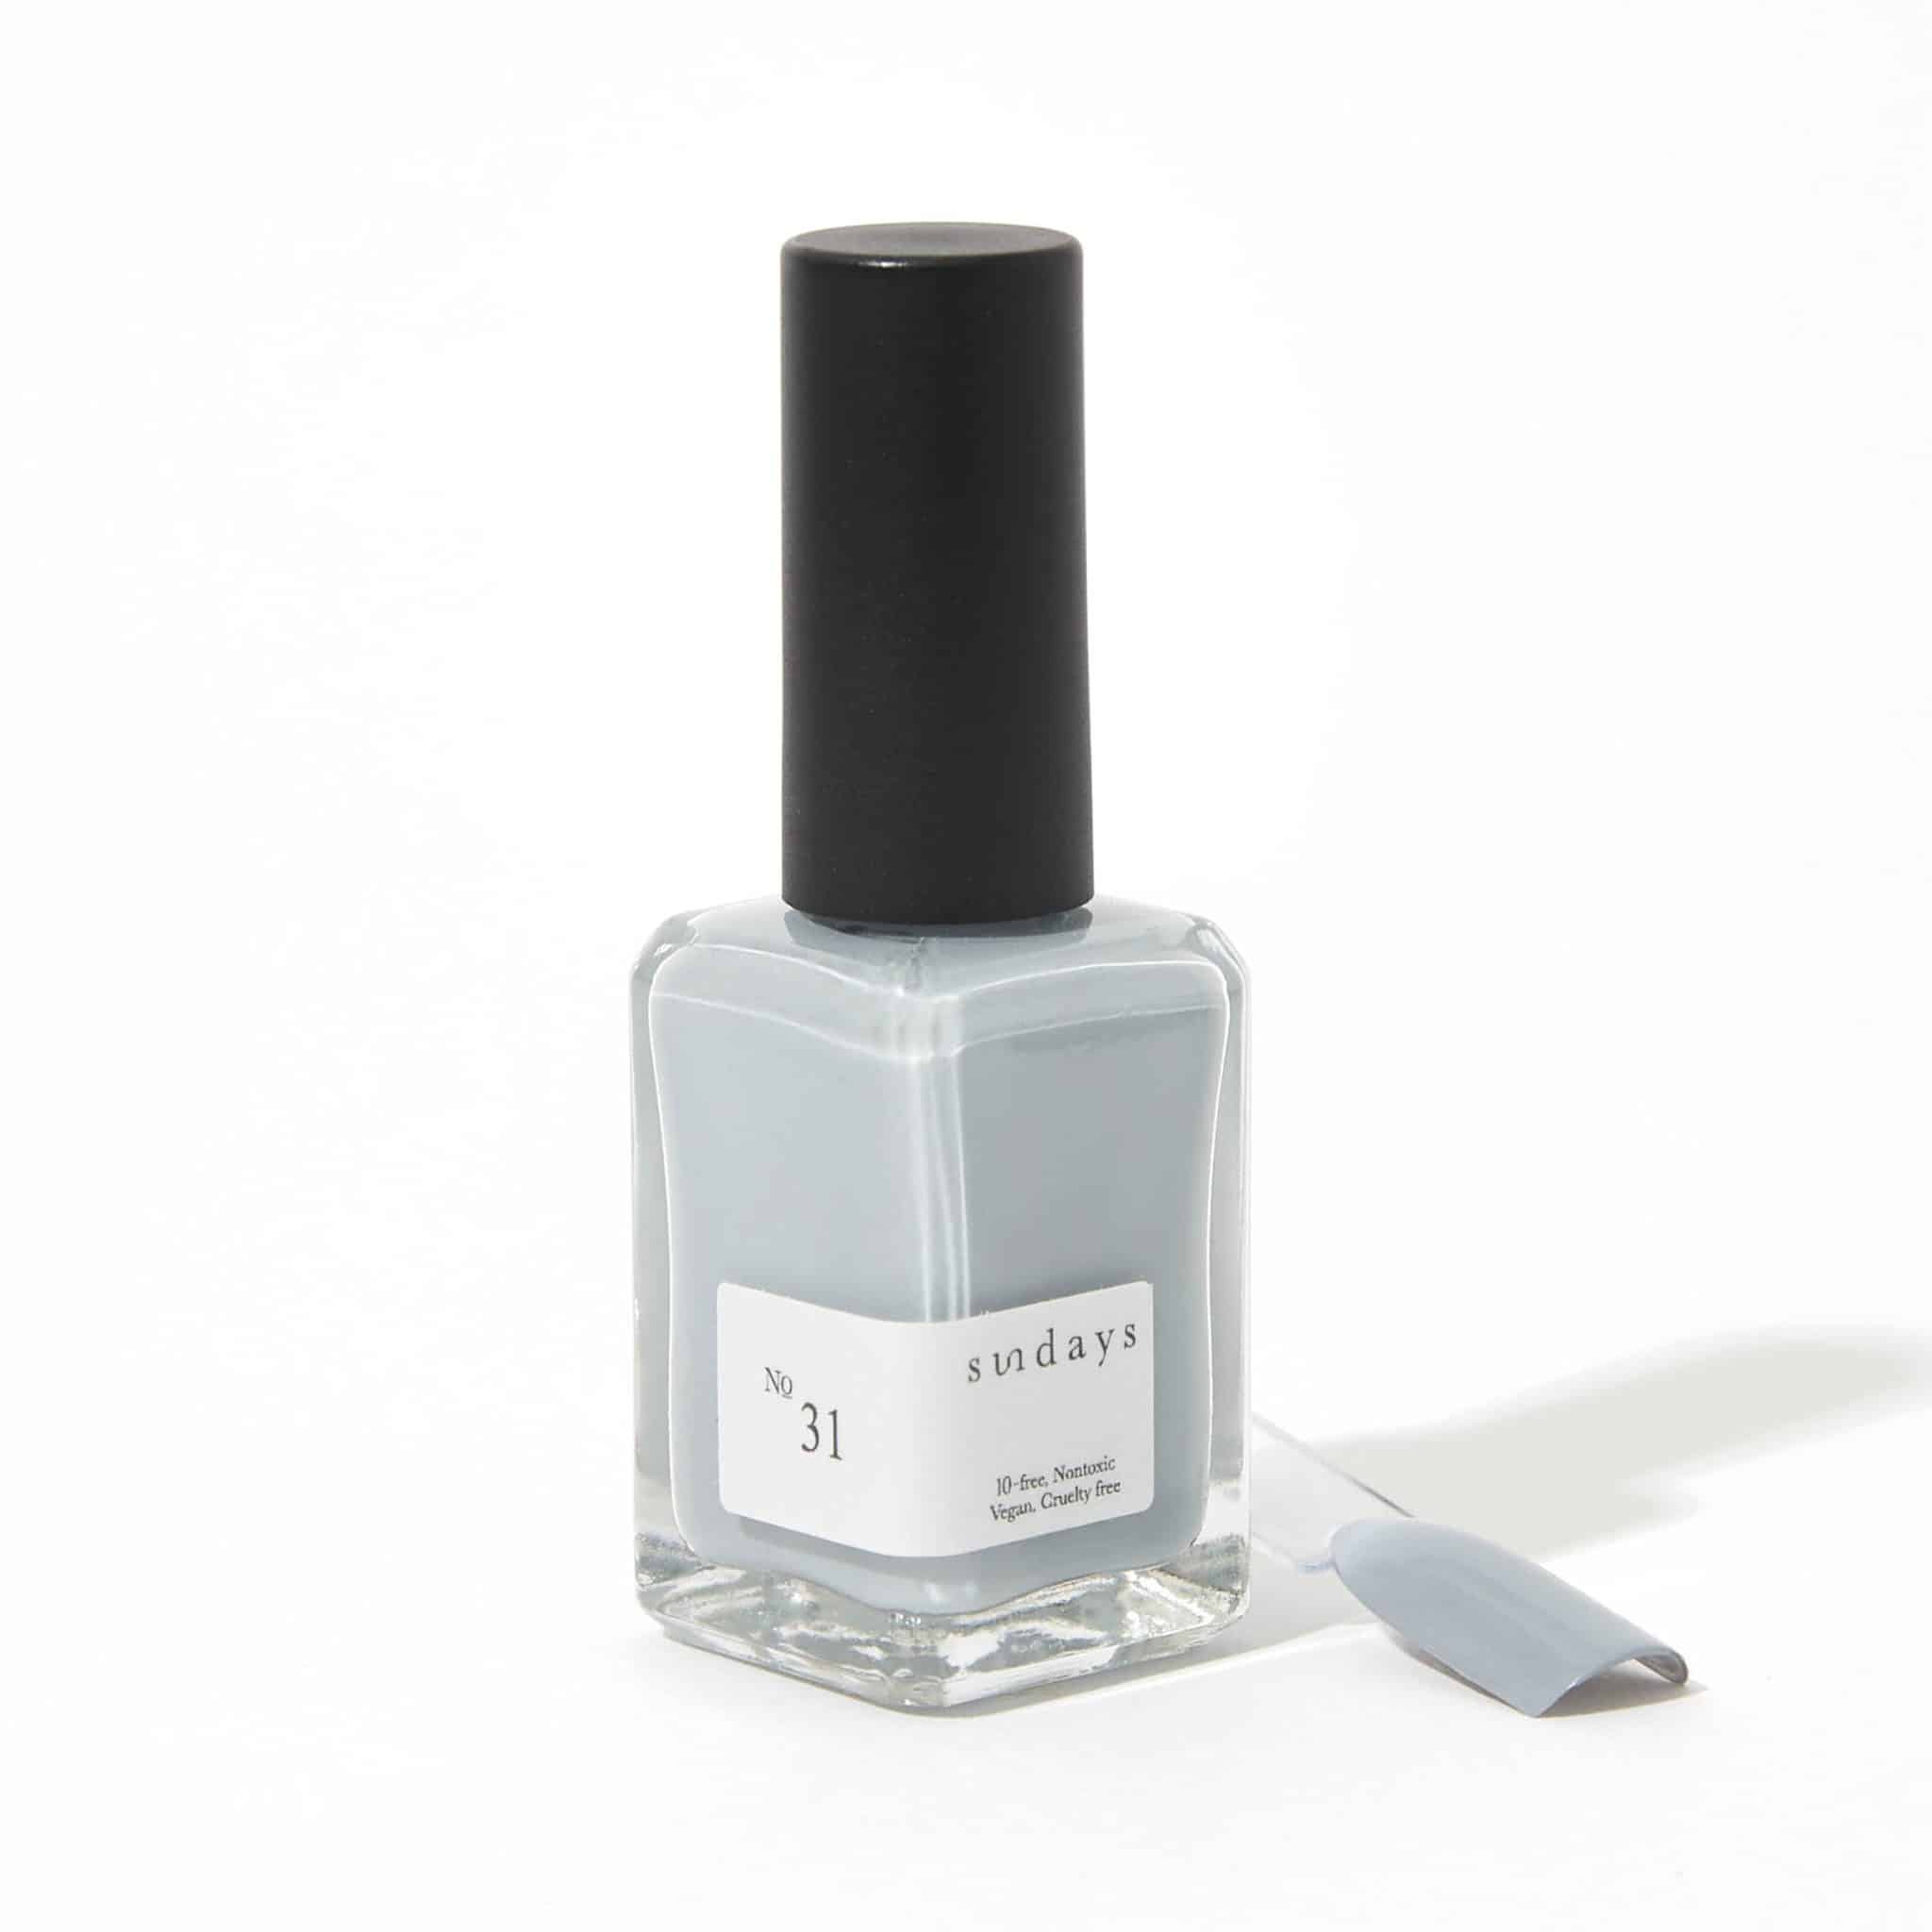 Non-toxic nail polish in muted gray